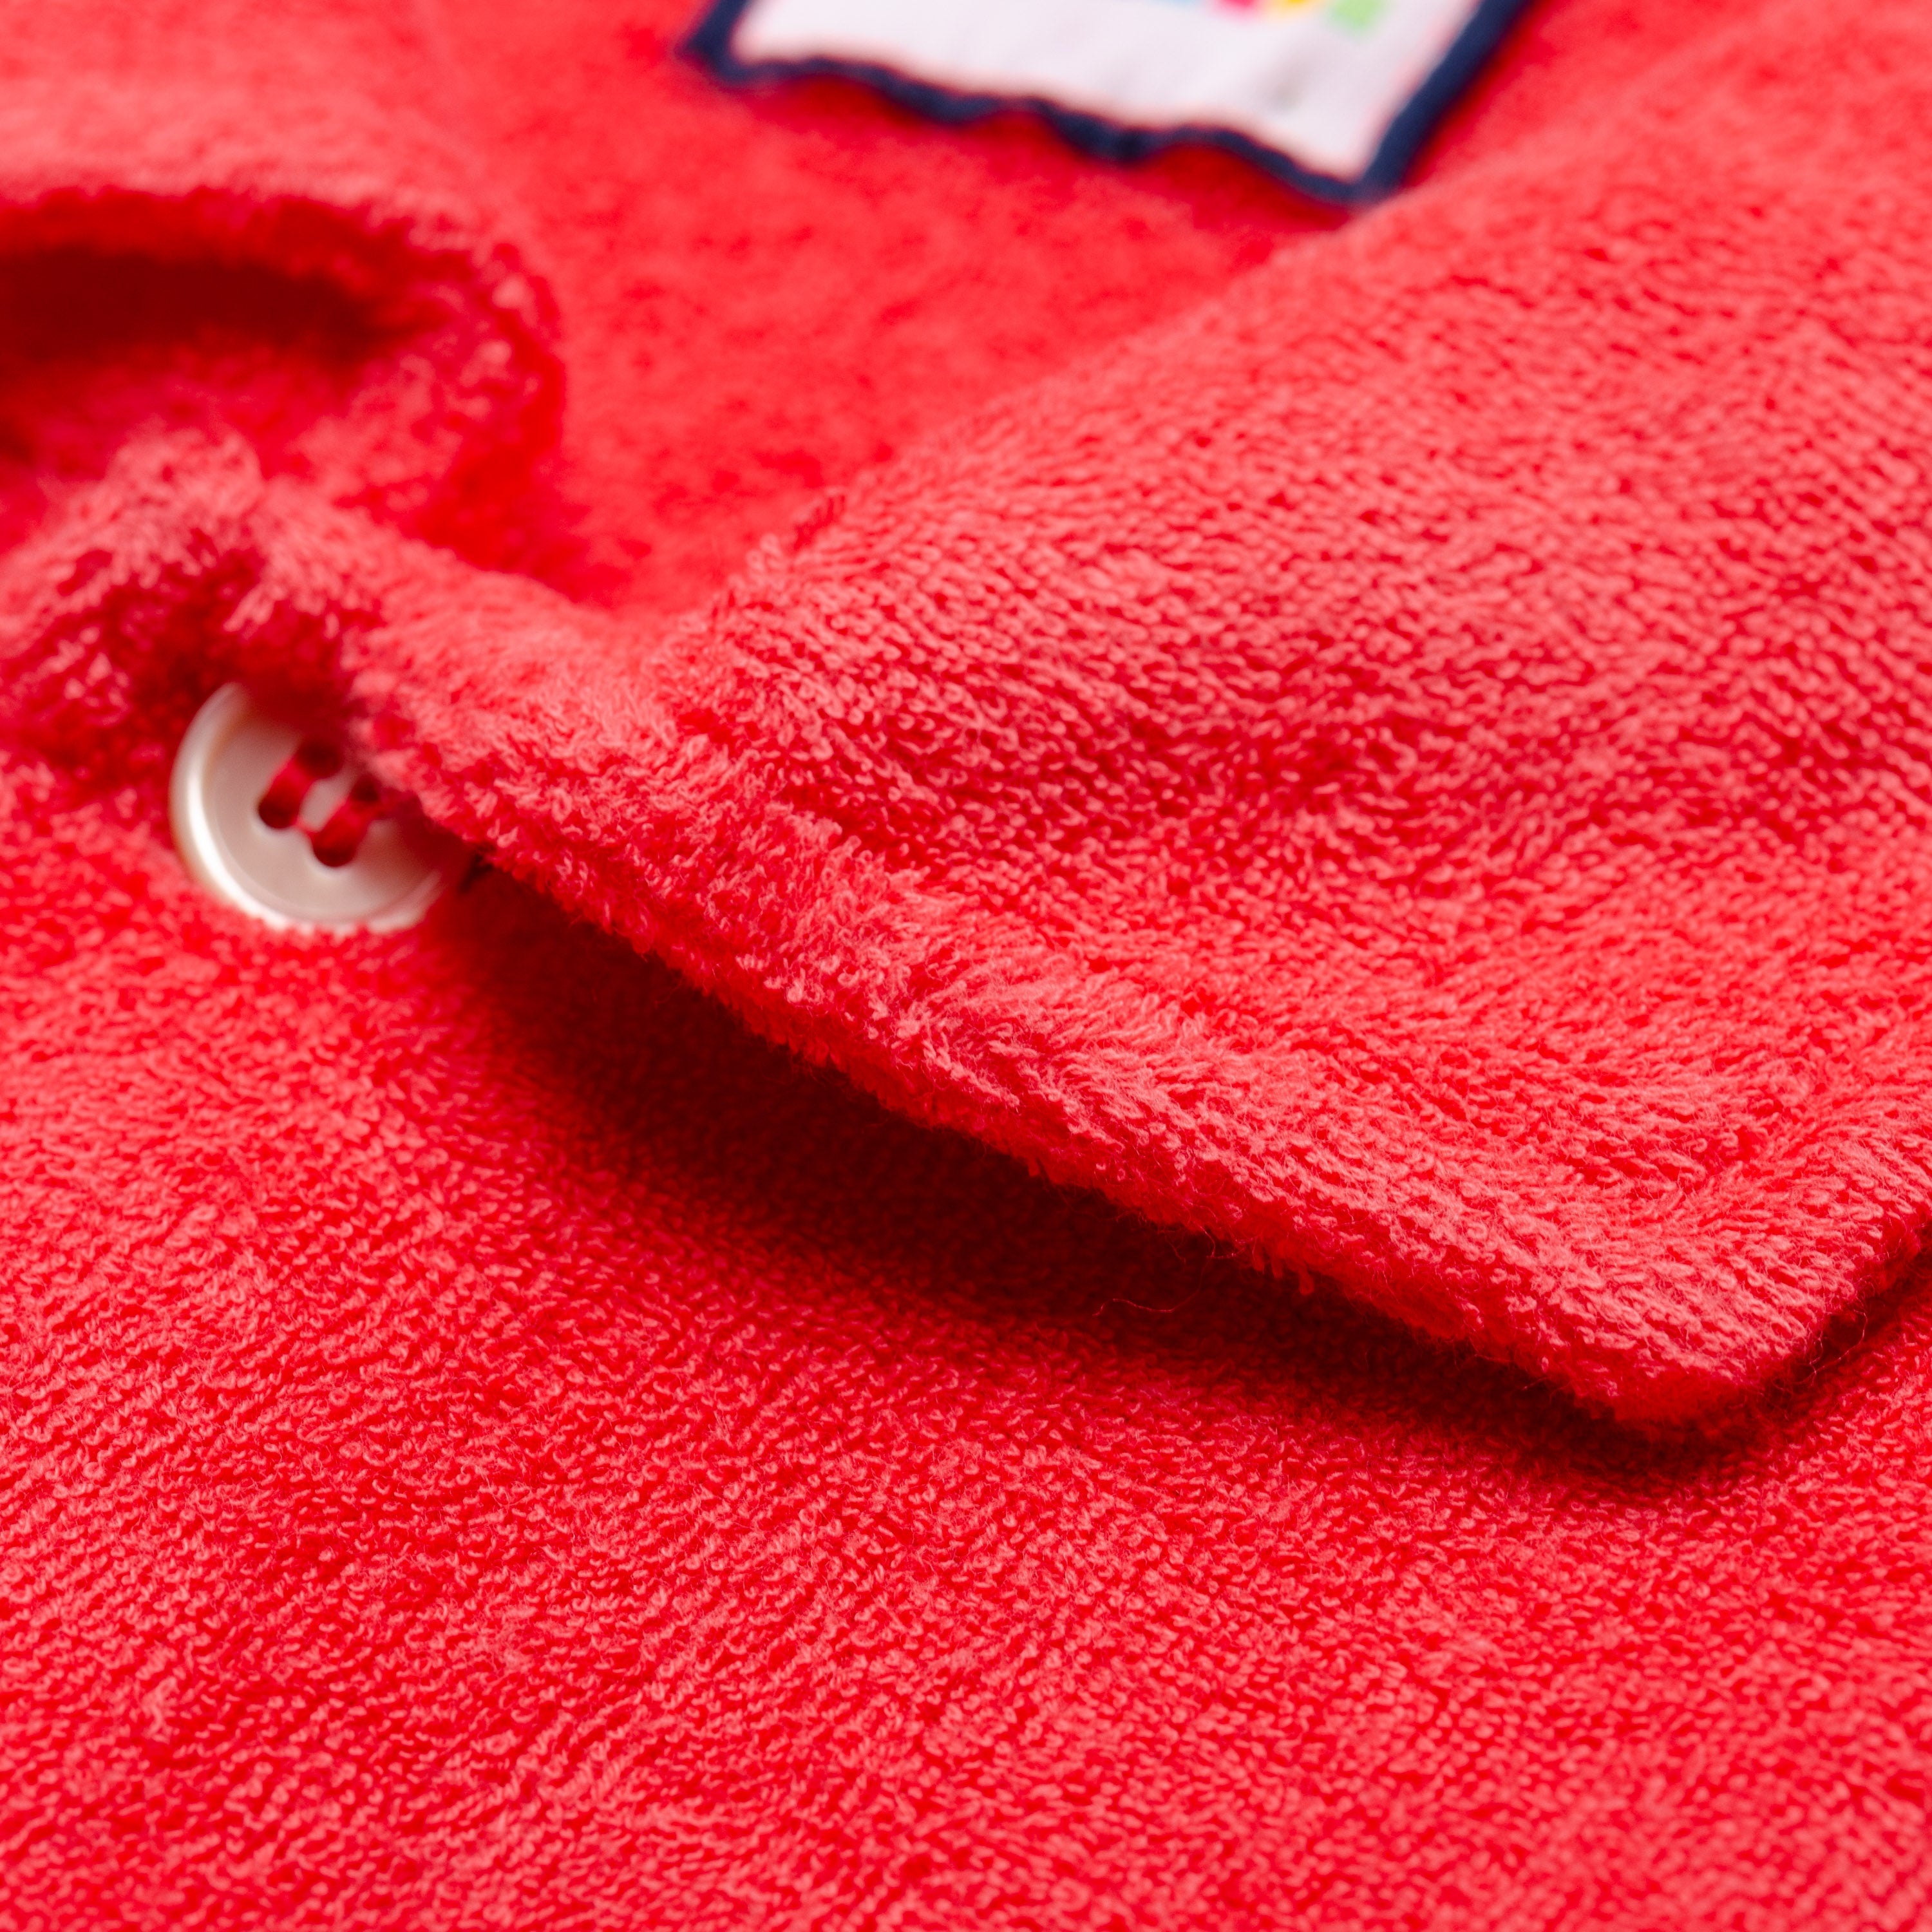 FEDELI "Mondial" Blood Orange Terry Cloth Short Sleeve Polo Shirt 54 NEW US XL Slim Fit FEDELI